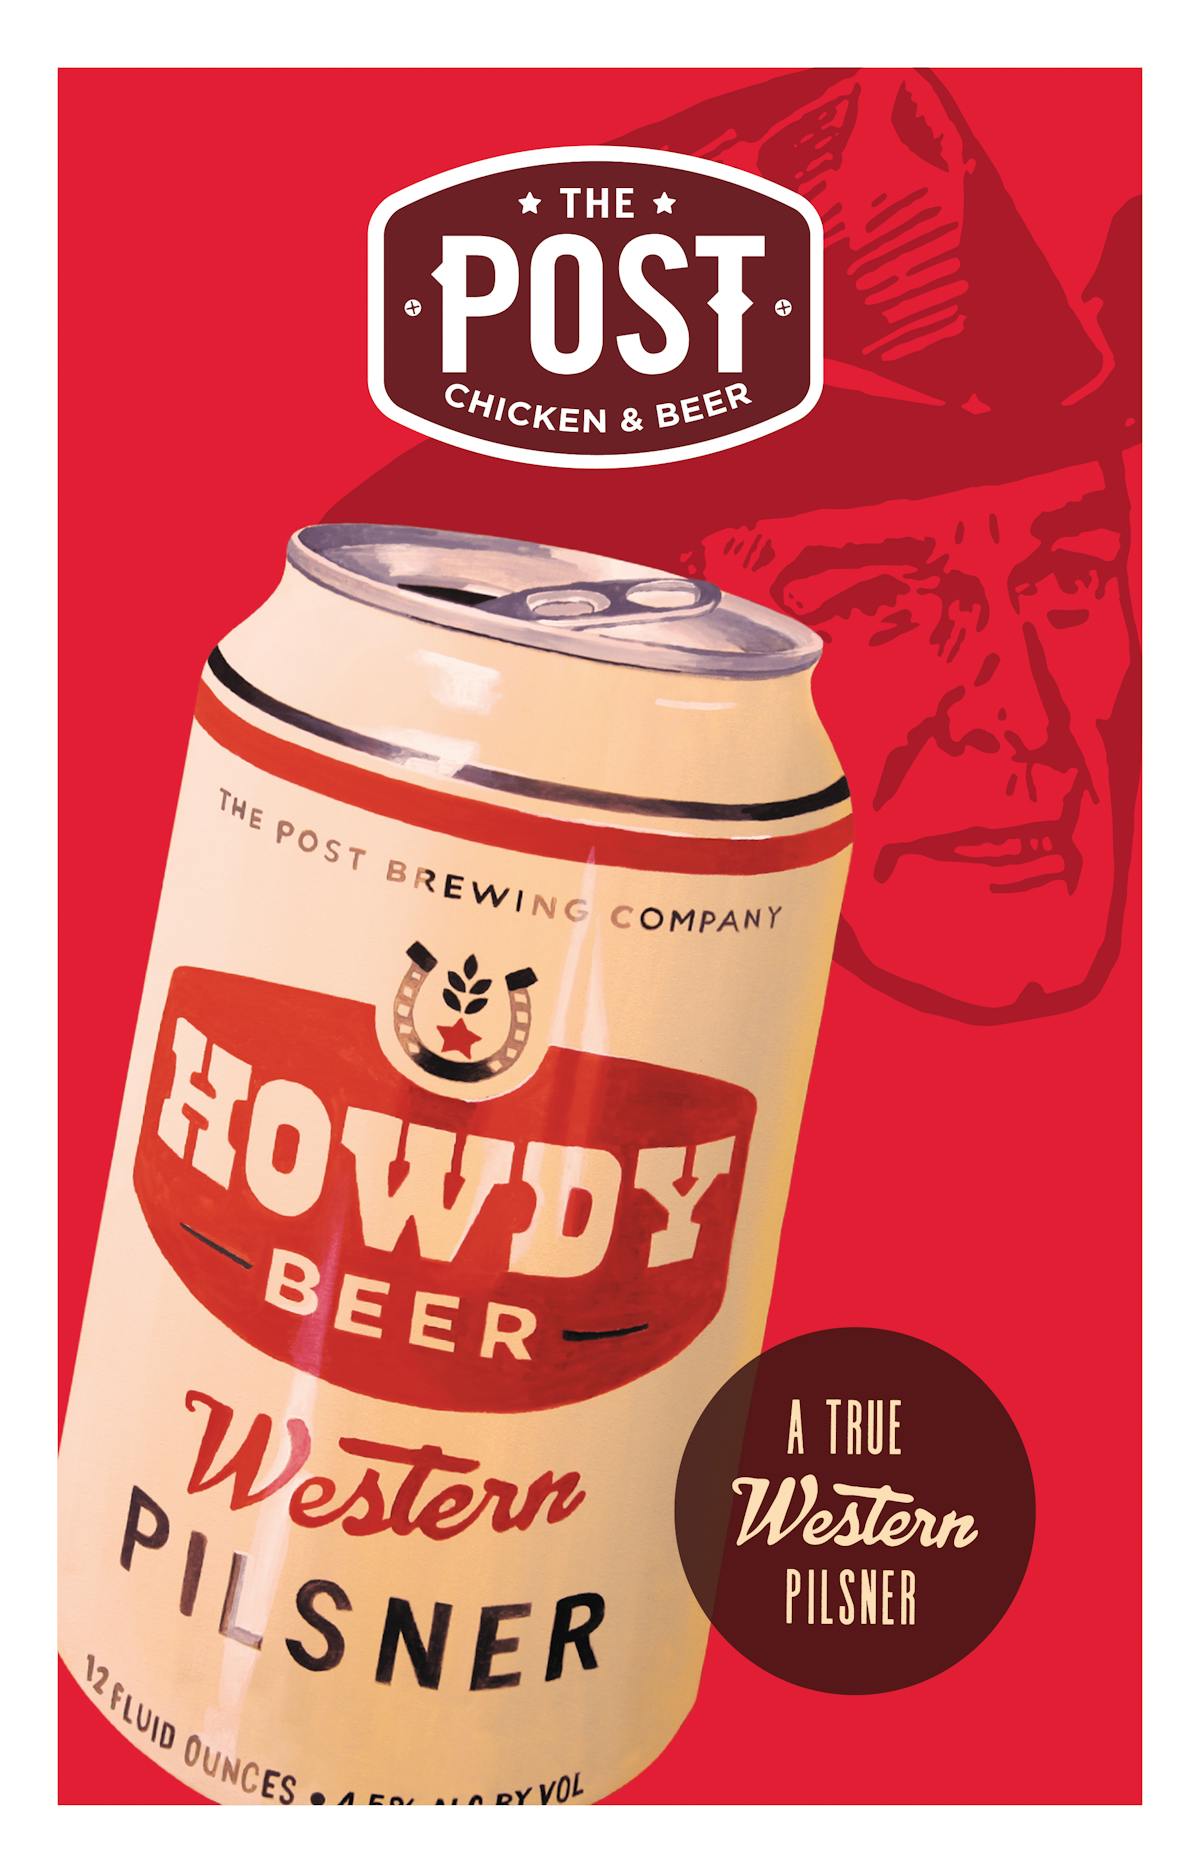 Award Winning Howdy Western Pilsner by Post Brewing